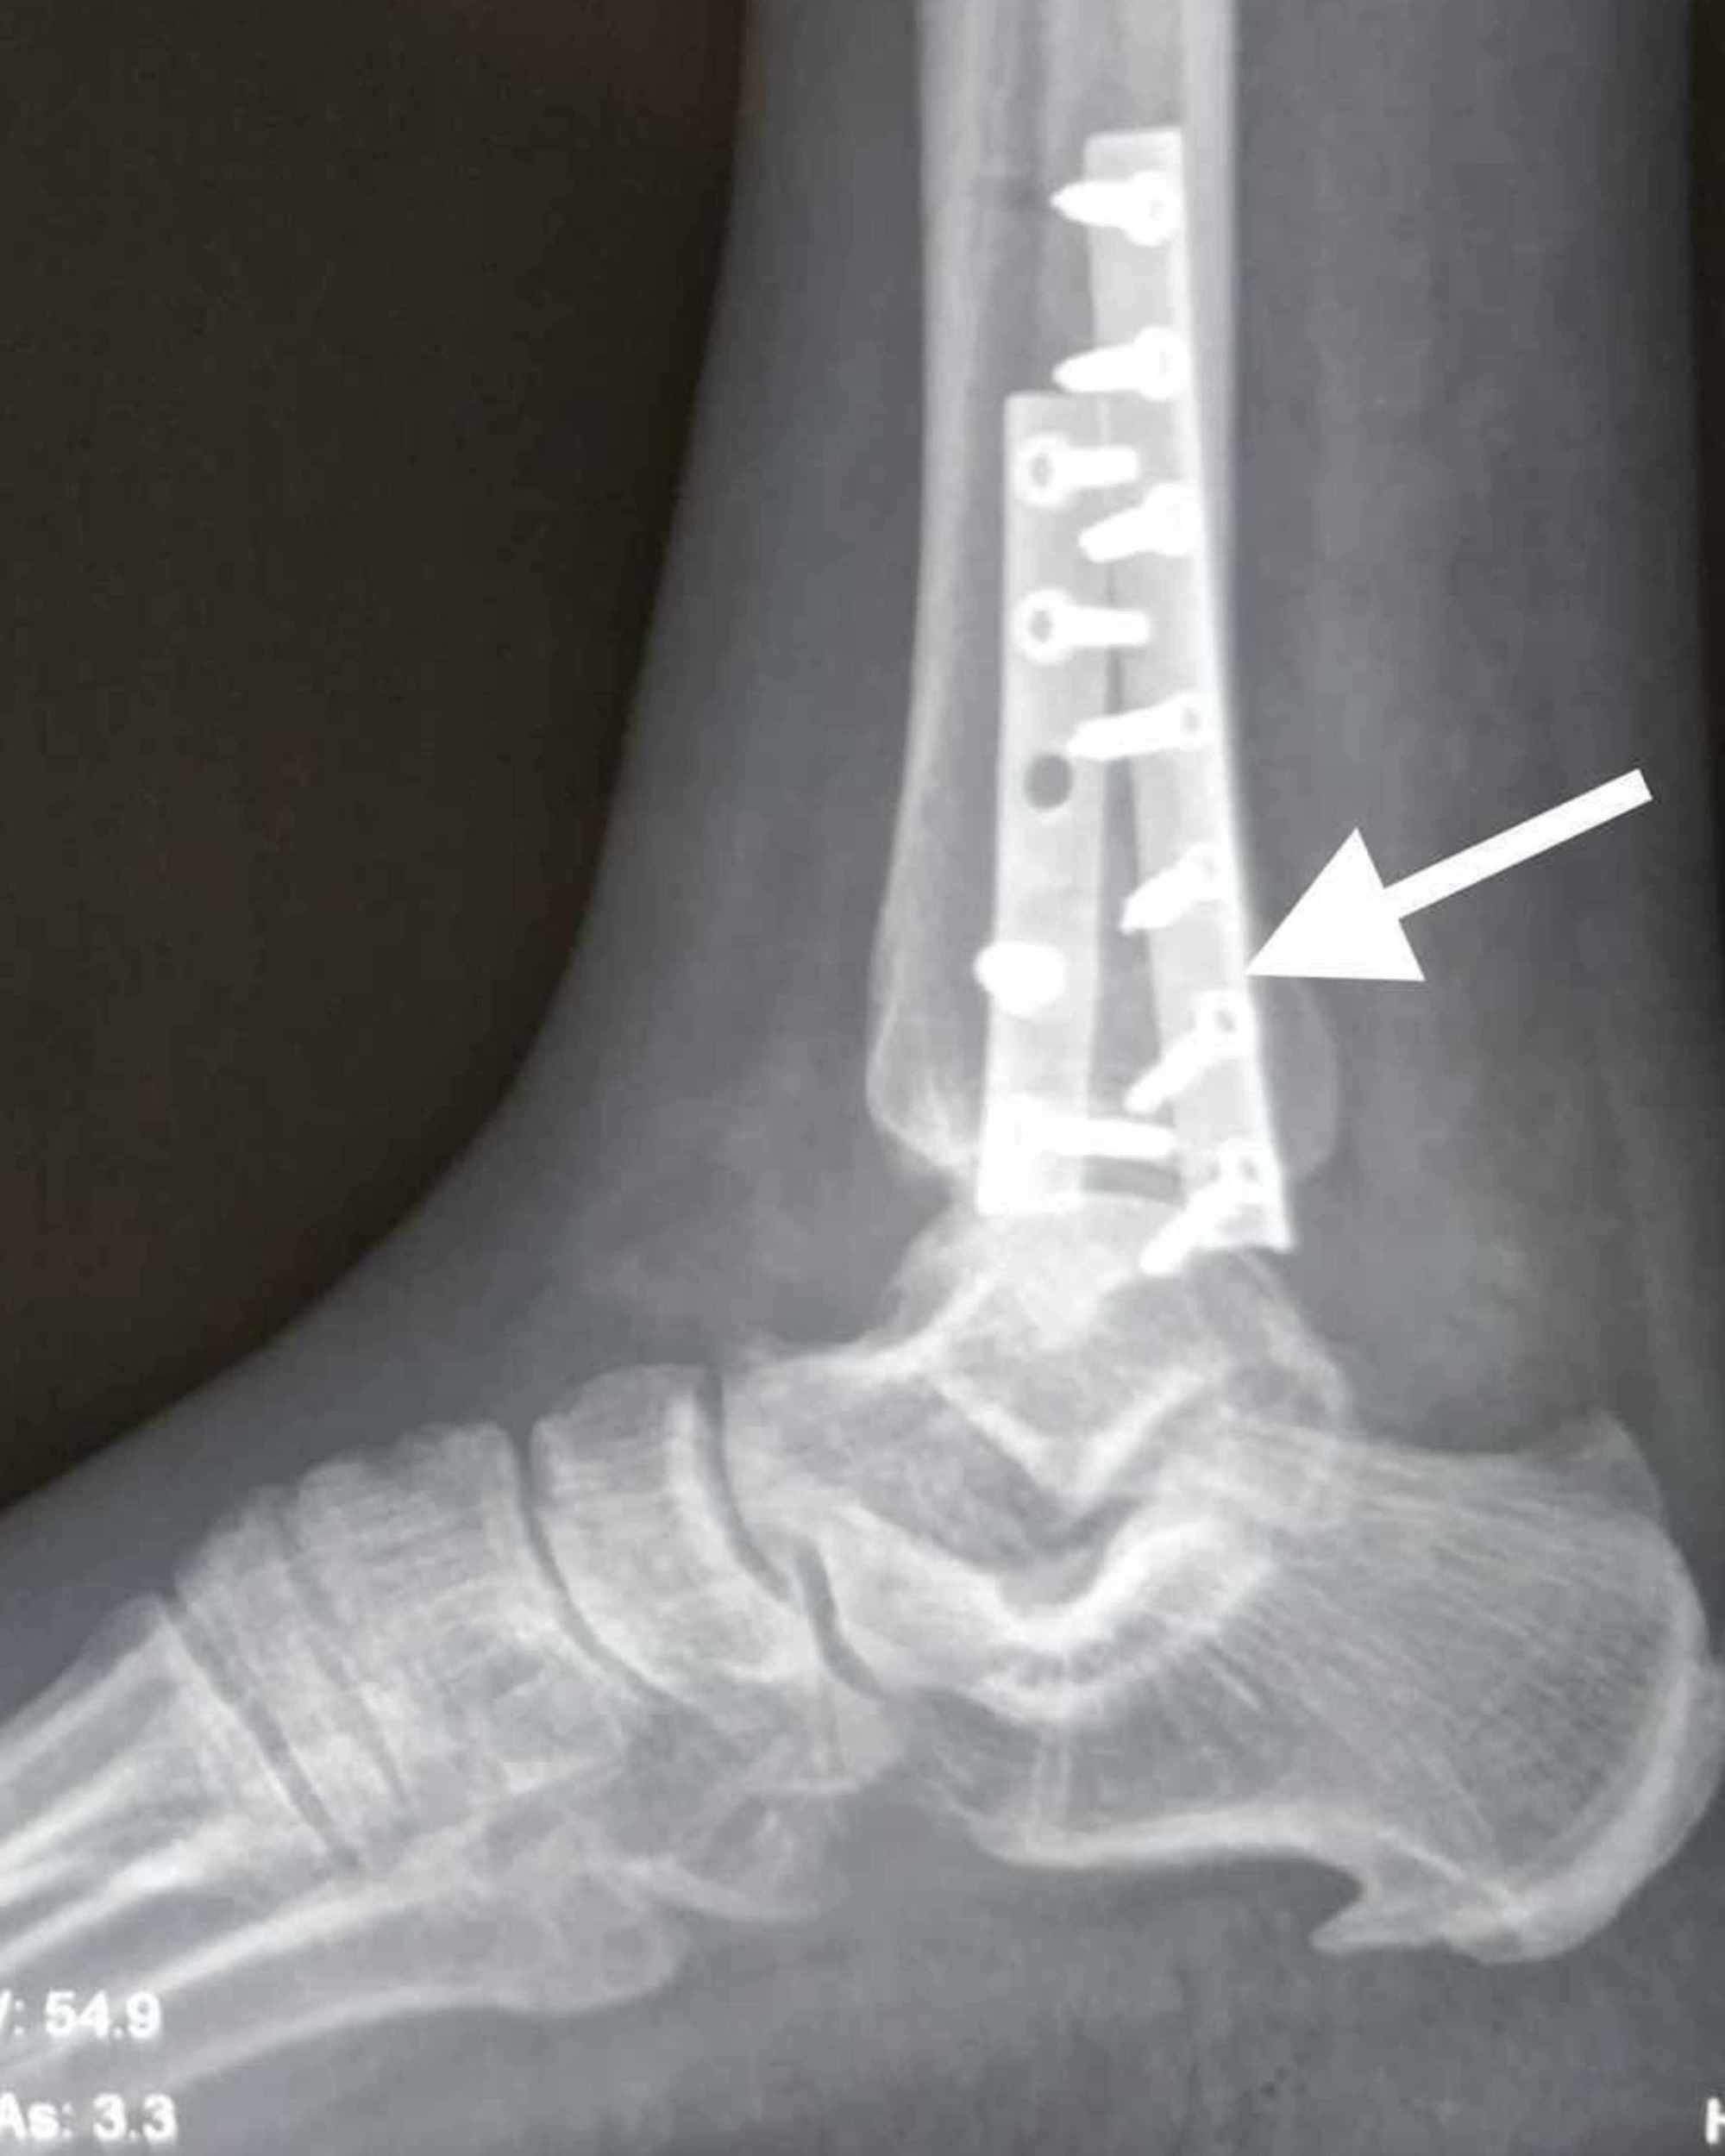 cpt orif distal fibula fracture